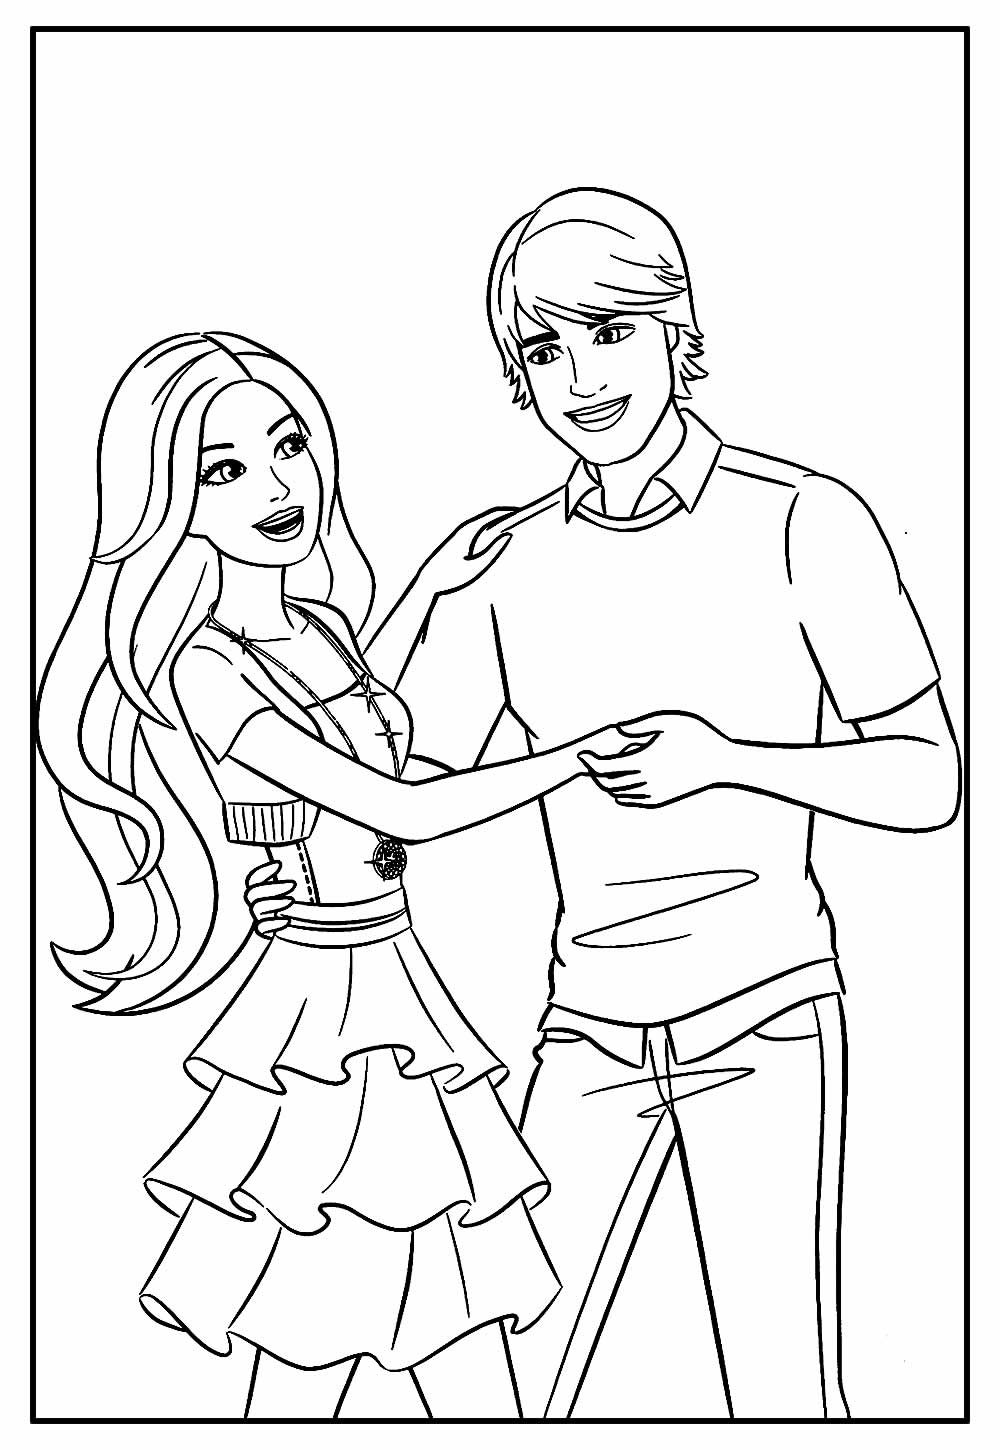 Ken e a Barbie para colorir